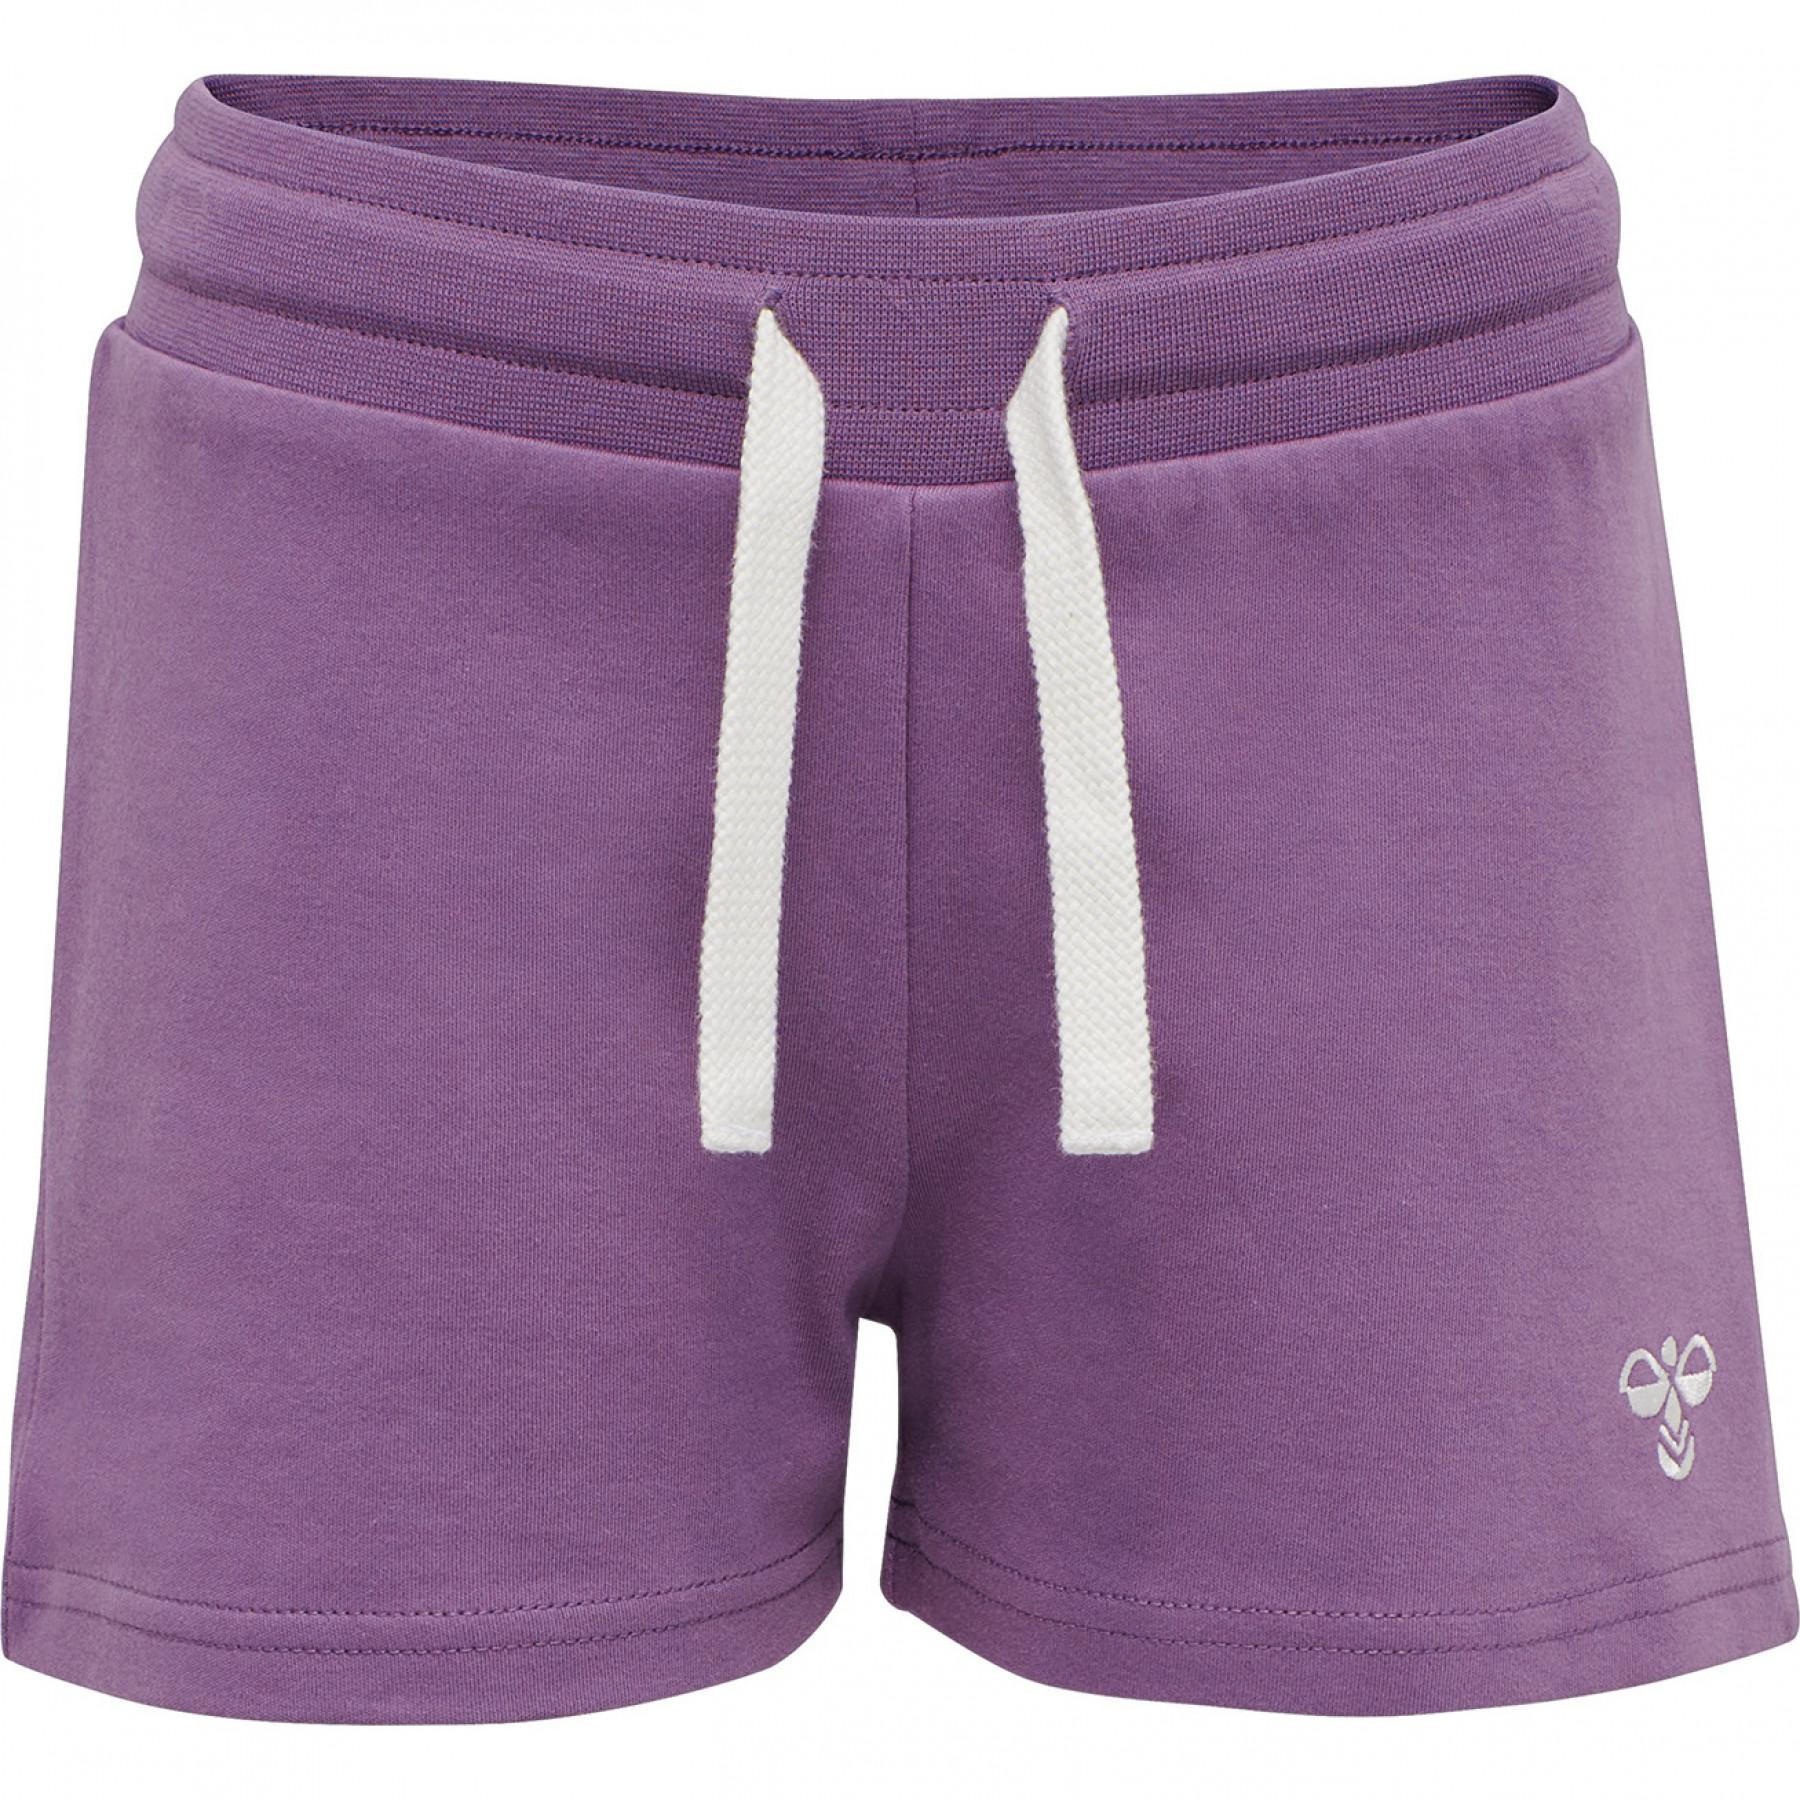 Pantalones cortos para niños Hummel hmlnille